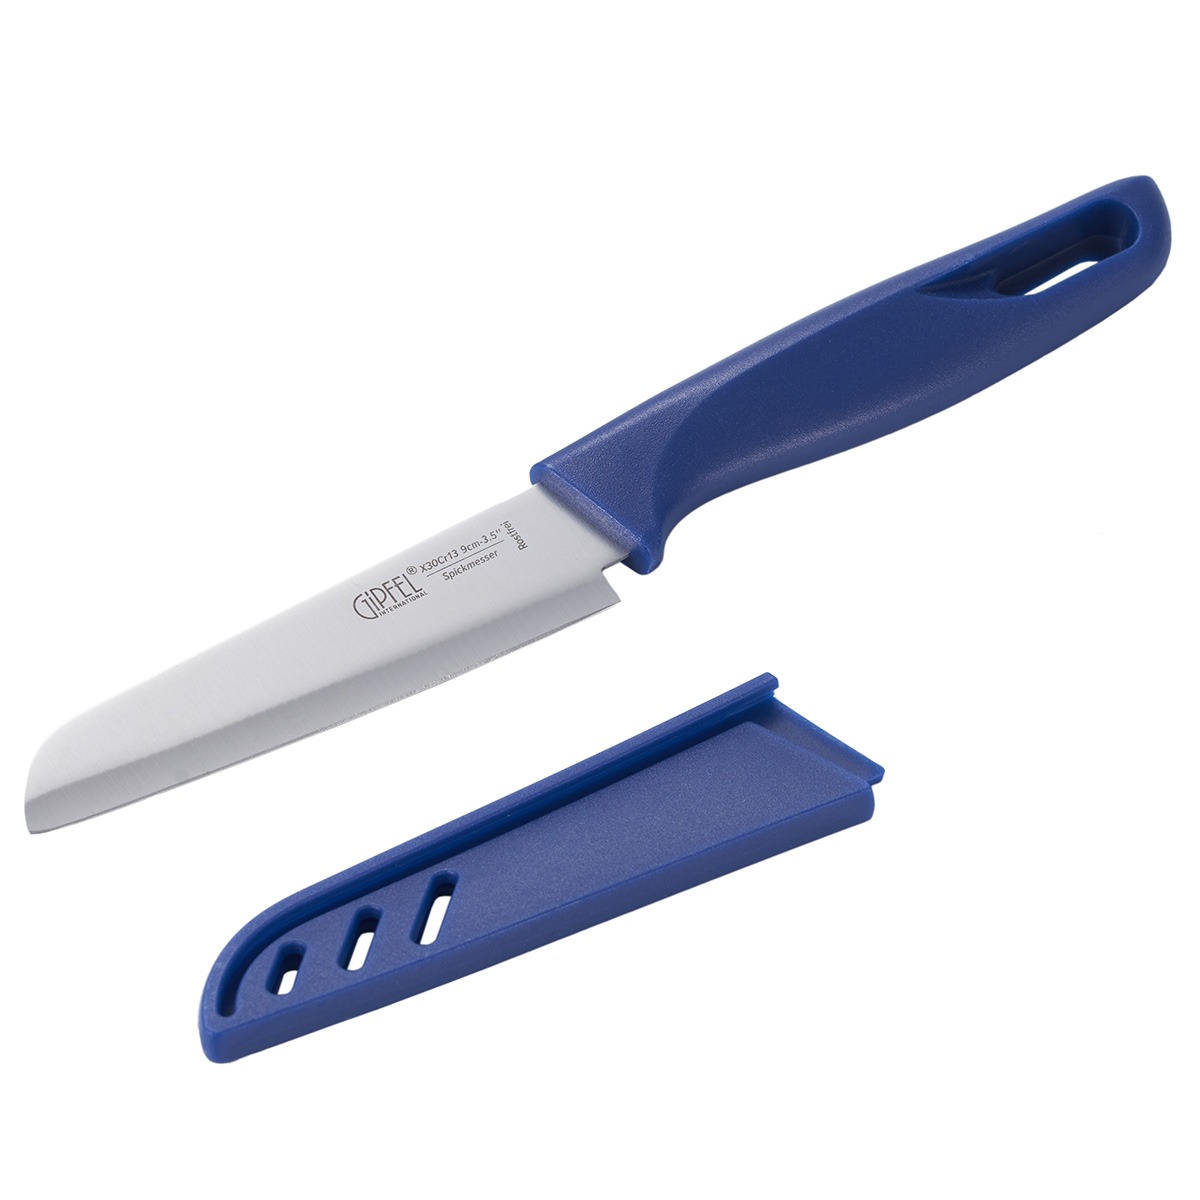 Нож для чистки овощей Gipfel Sorti стальной синий 9 см нож для чистки овощей gipfel sorti стальной синий 9 см